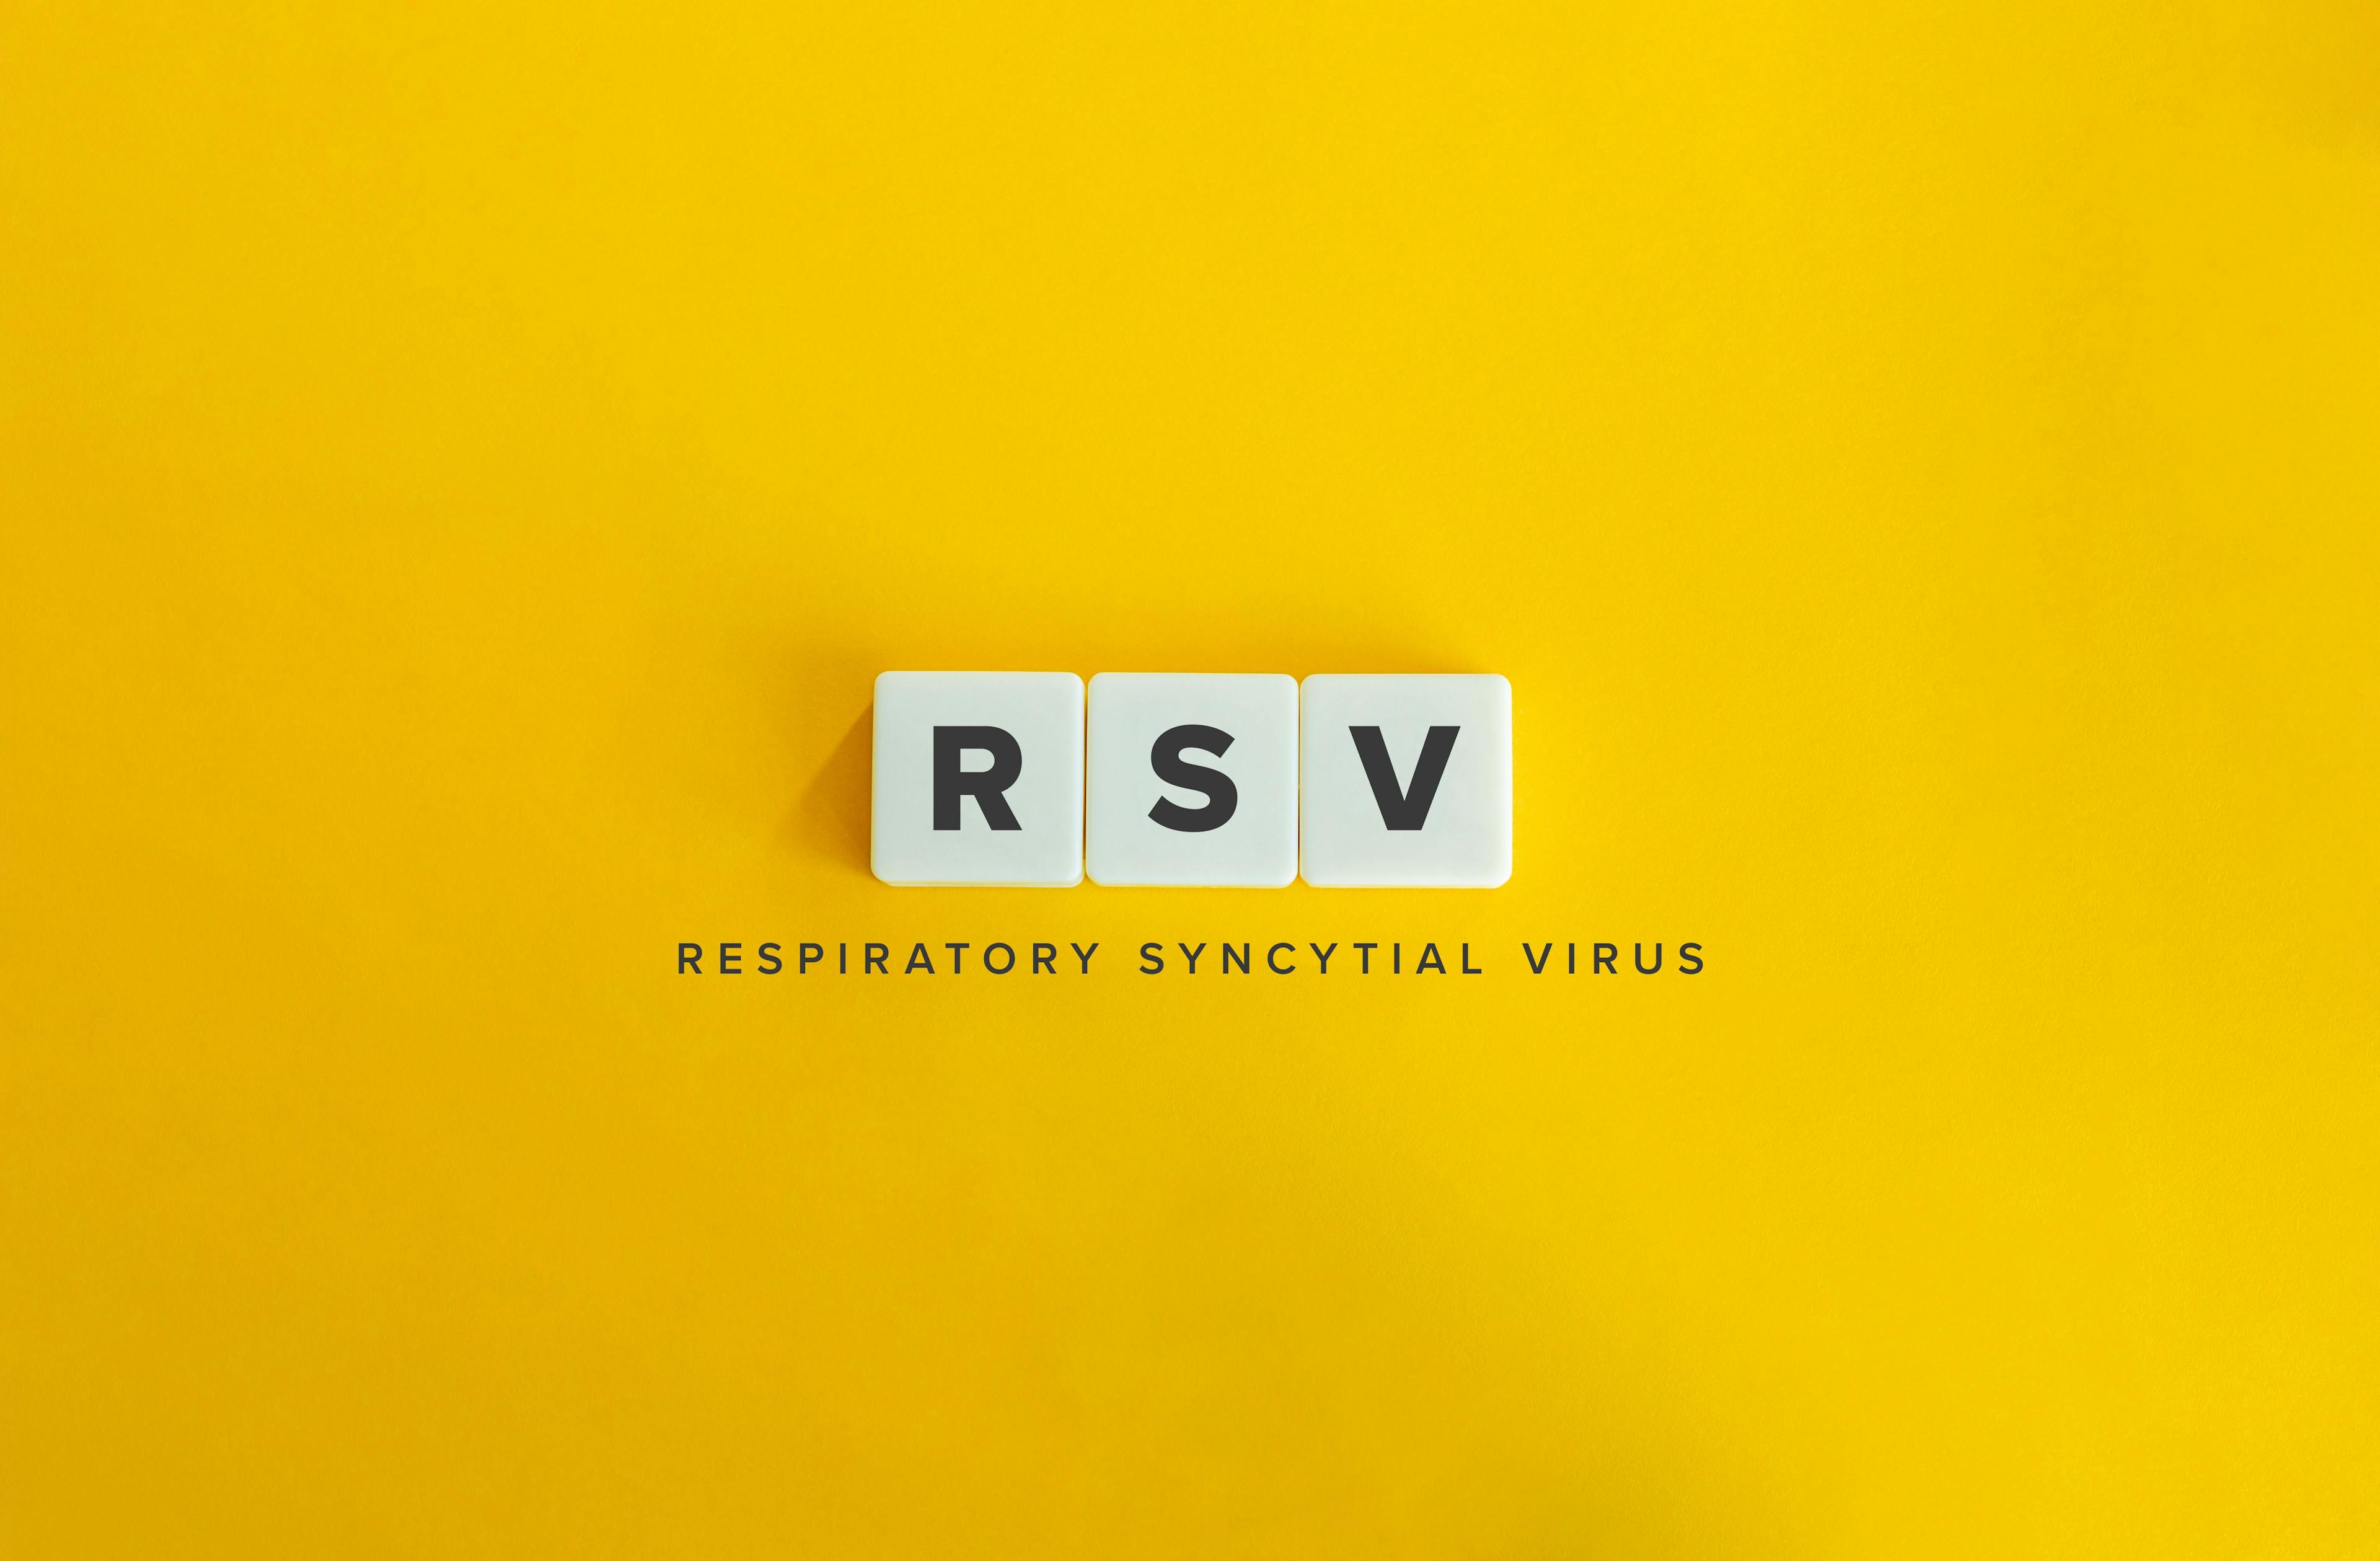 RSV (Respiratory Syncytial Virus) Banner. Letter Tiles on Yellow Background. Minimal Aesthetics.